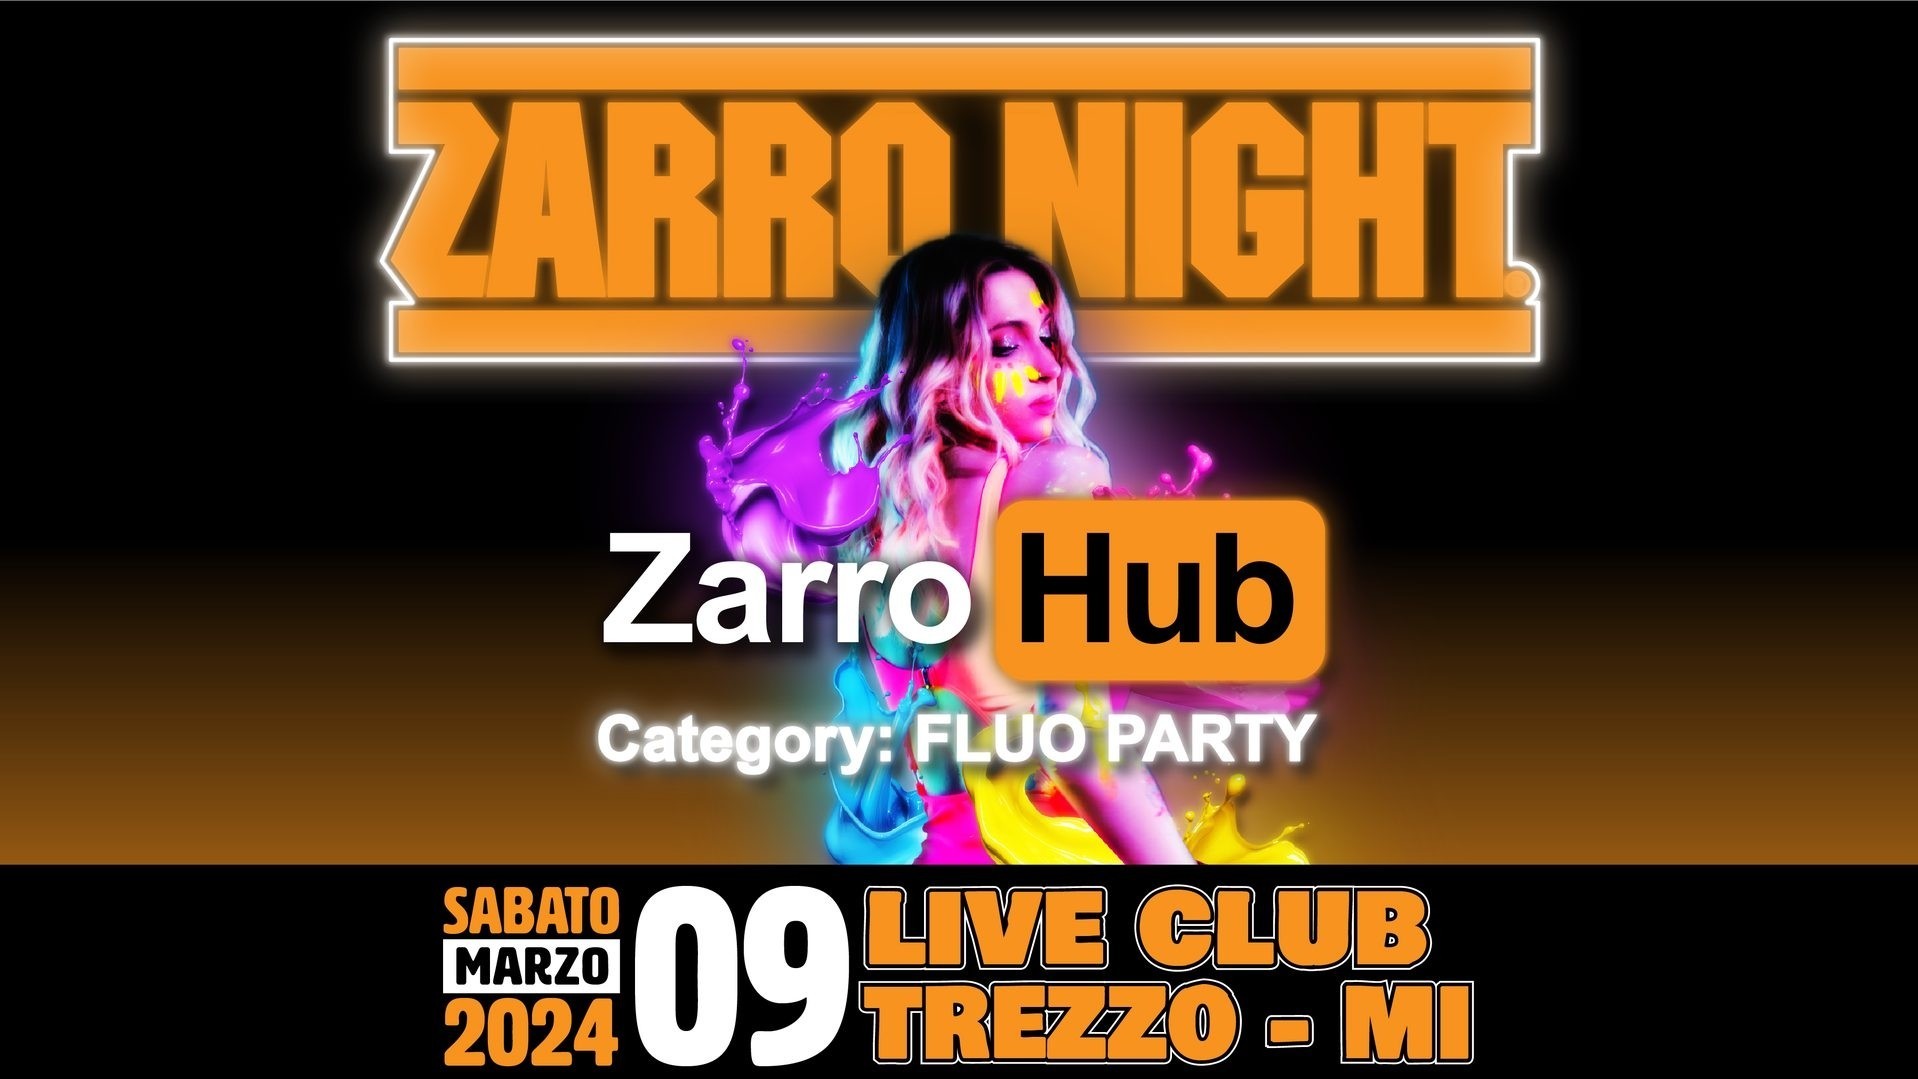 Zarro Night® - Category: Fluo Party